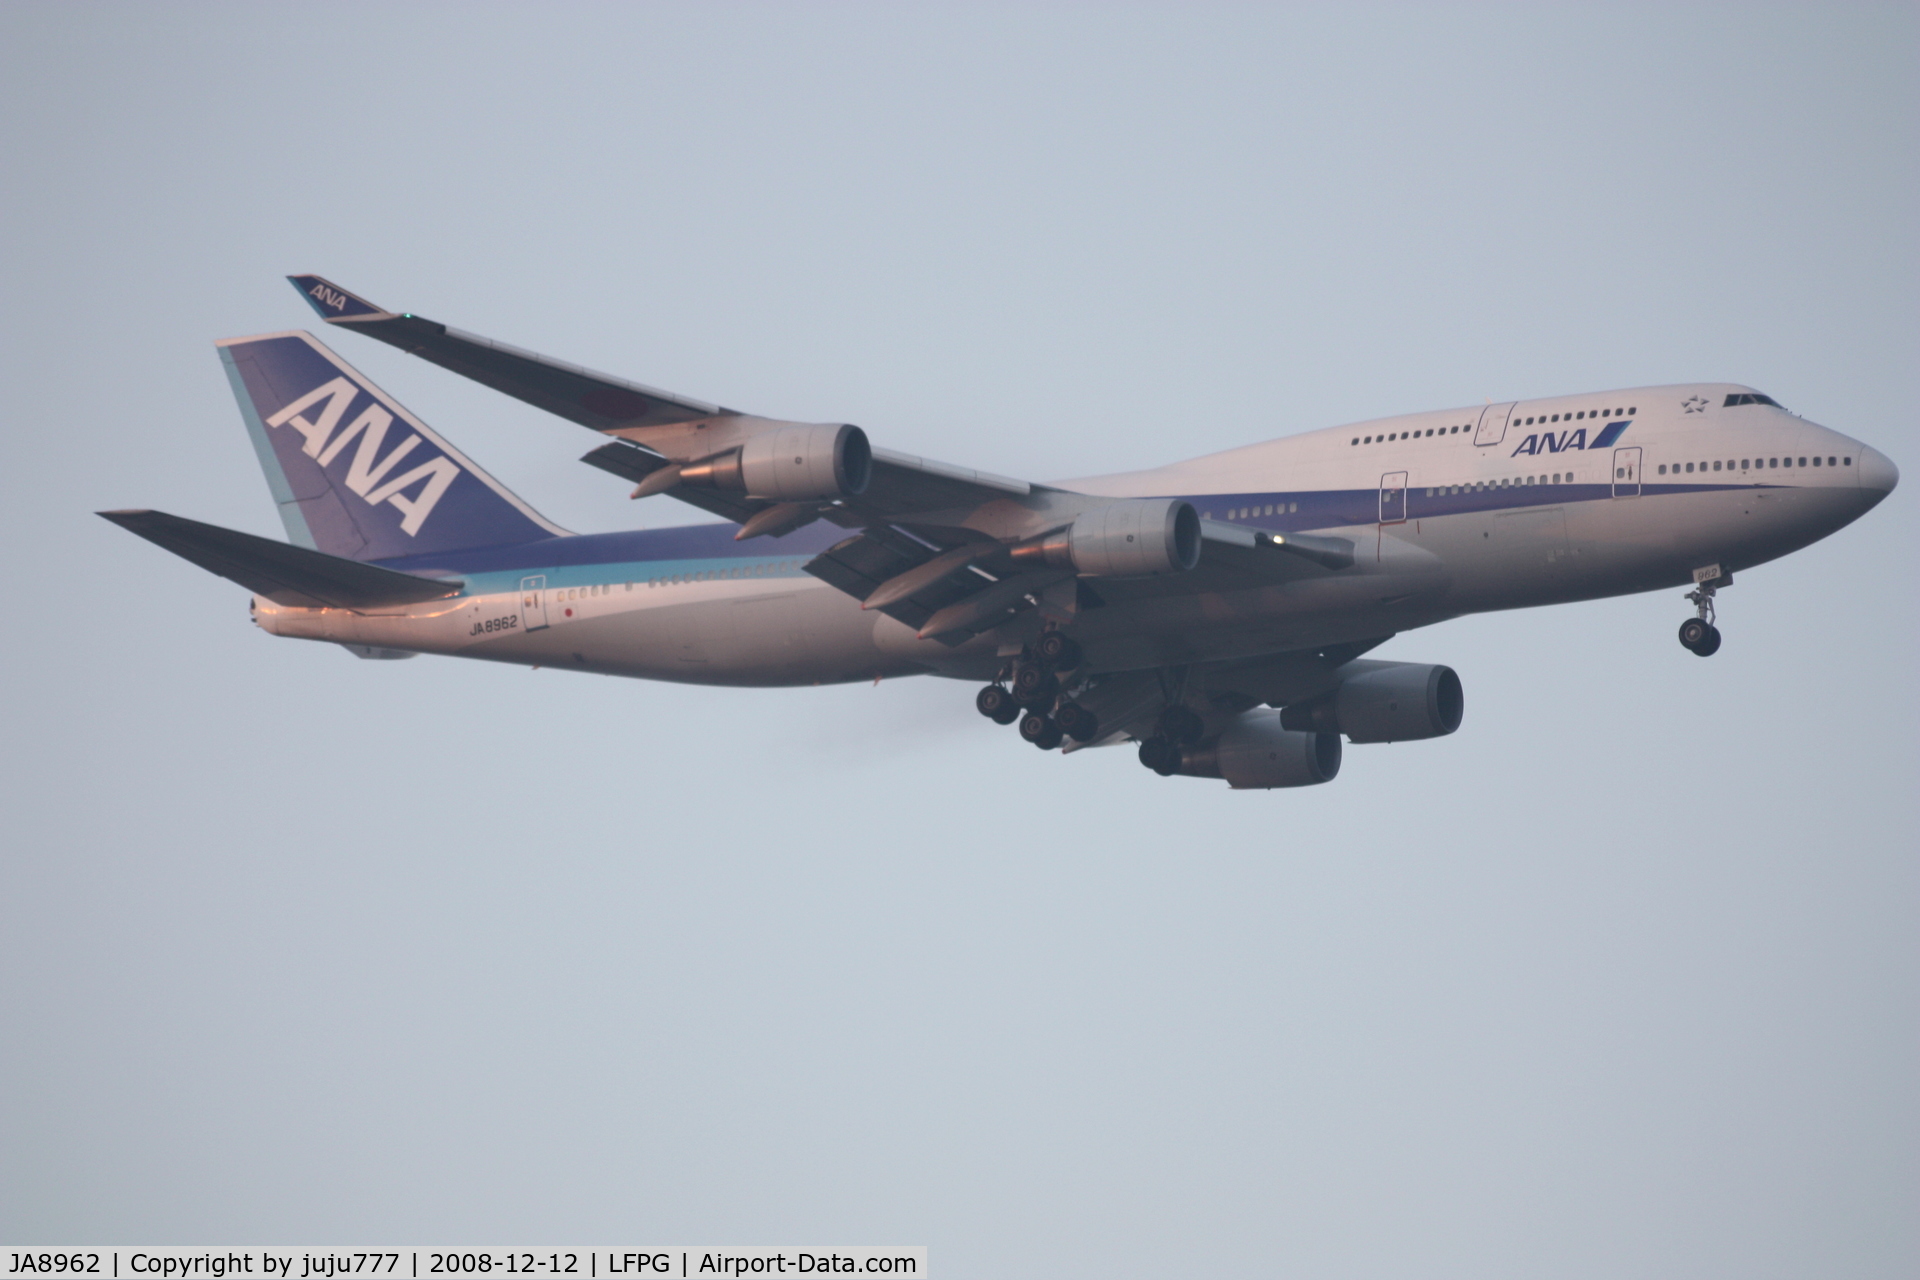 JA8962, 1993 Boeing 747-481 C/N 25645, on landing at CDG